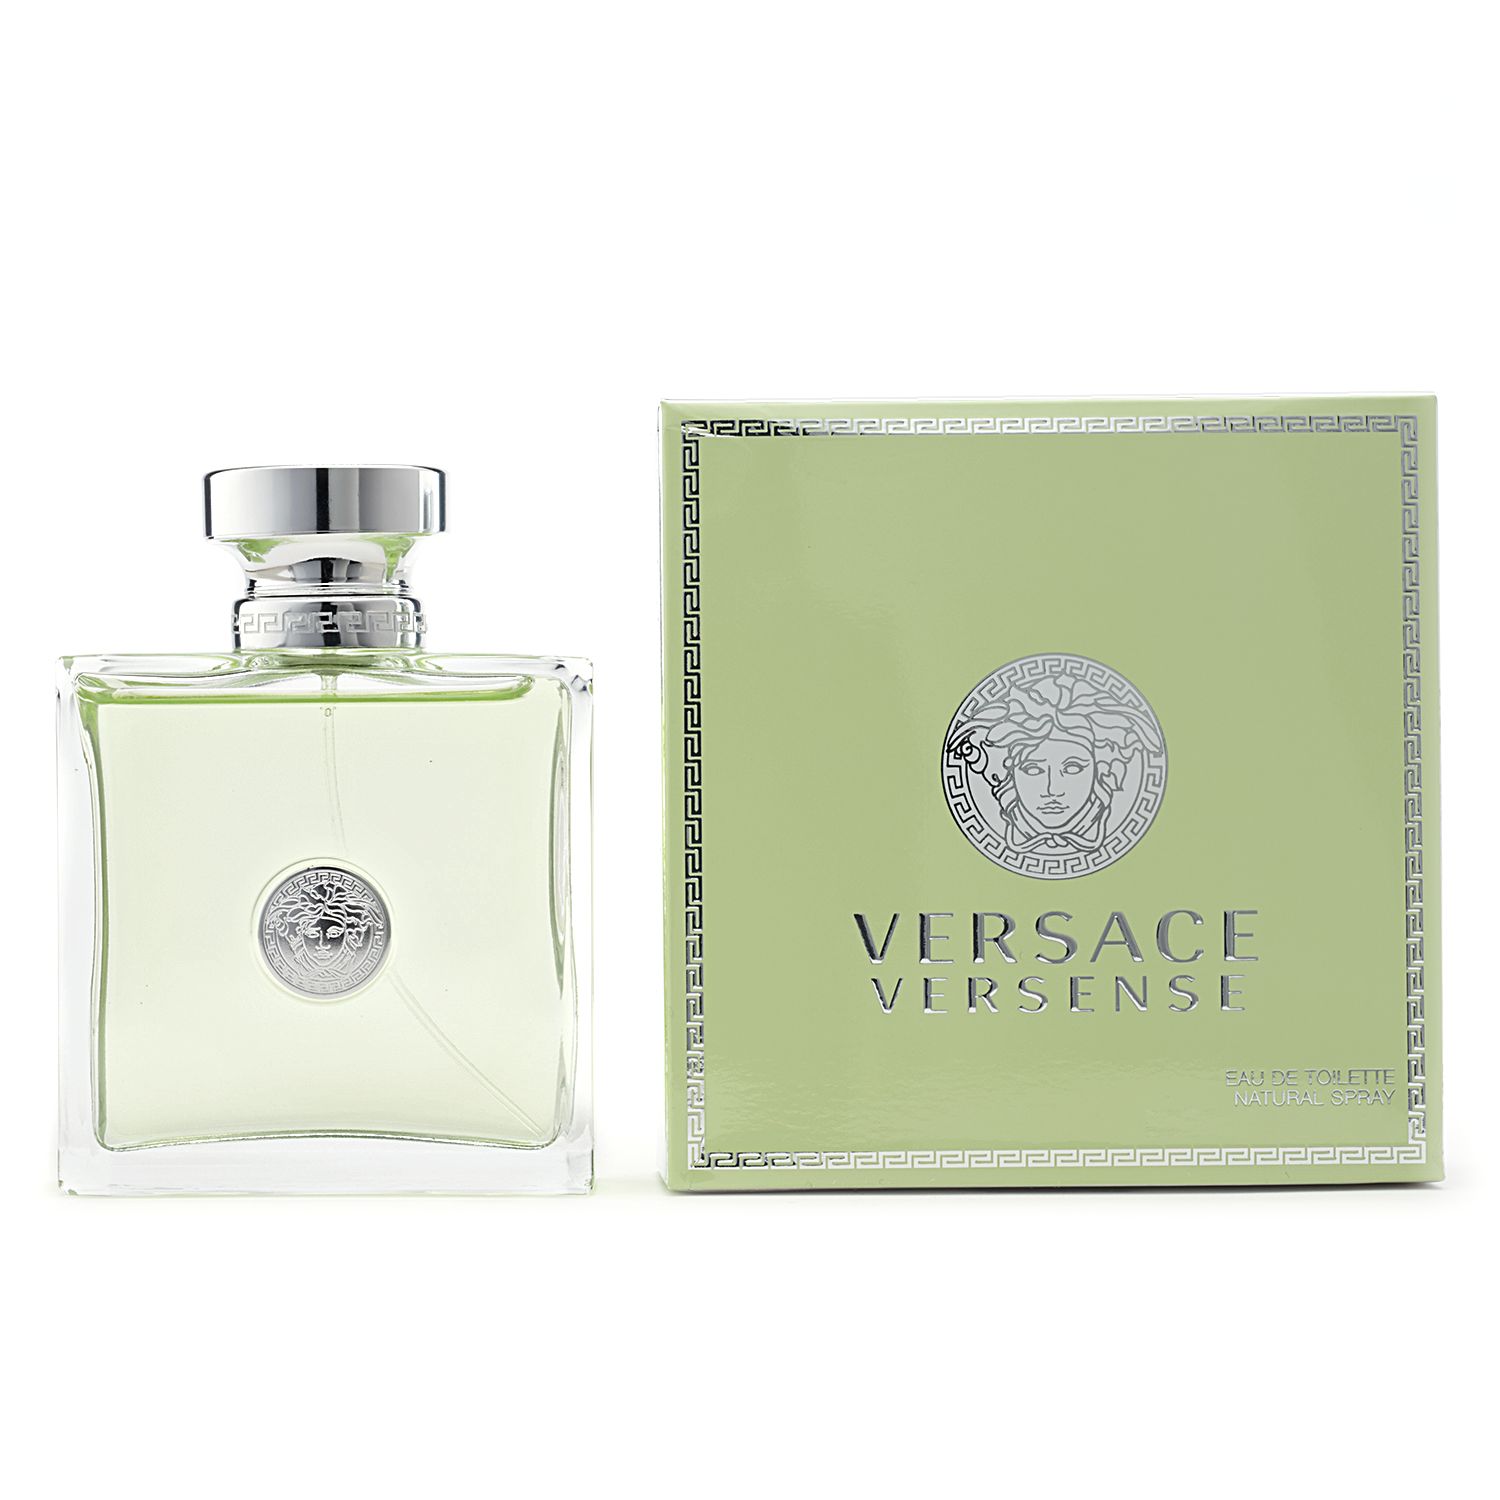 versace green bottle perfume